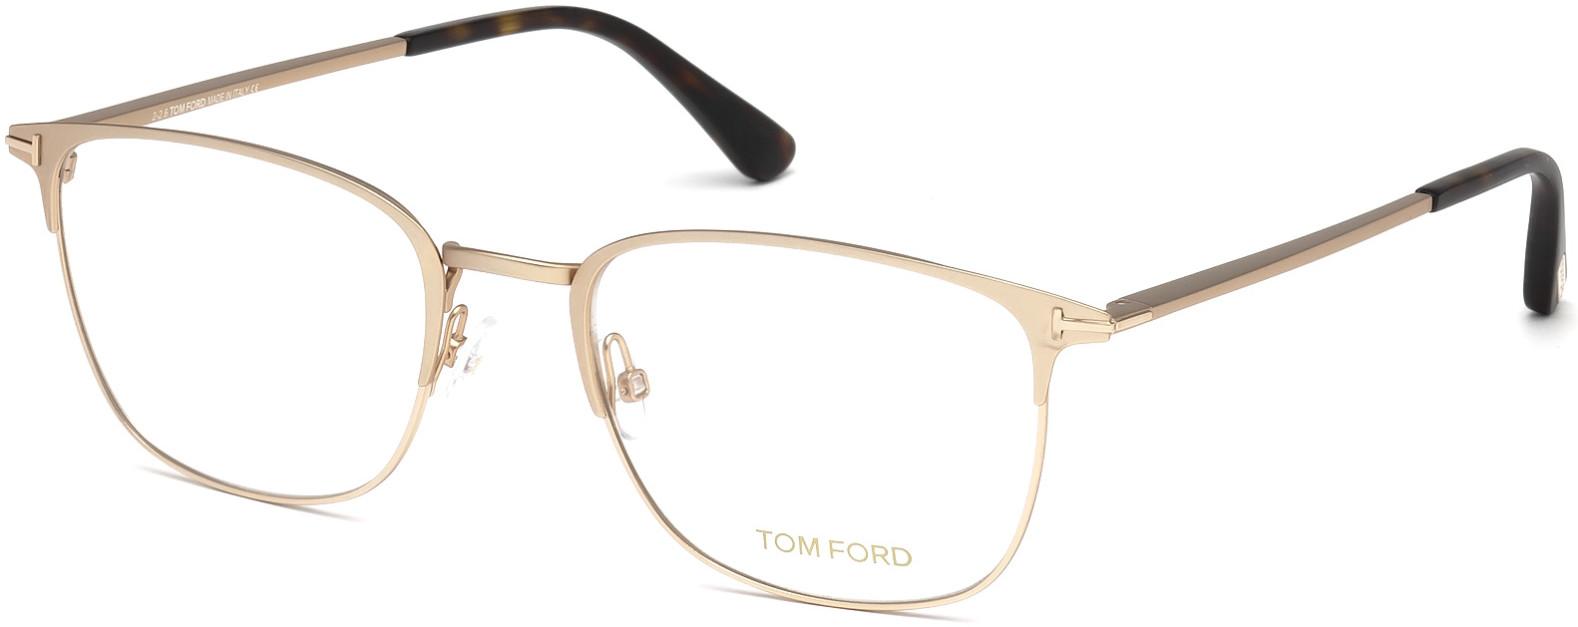 Tom Ford 5453 Eyeglasses – 